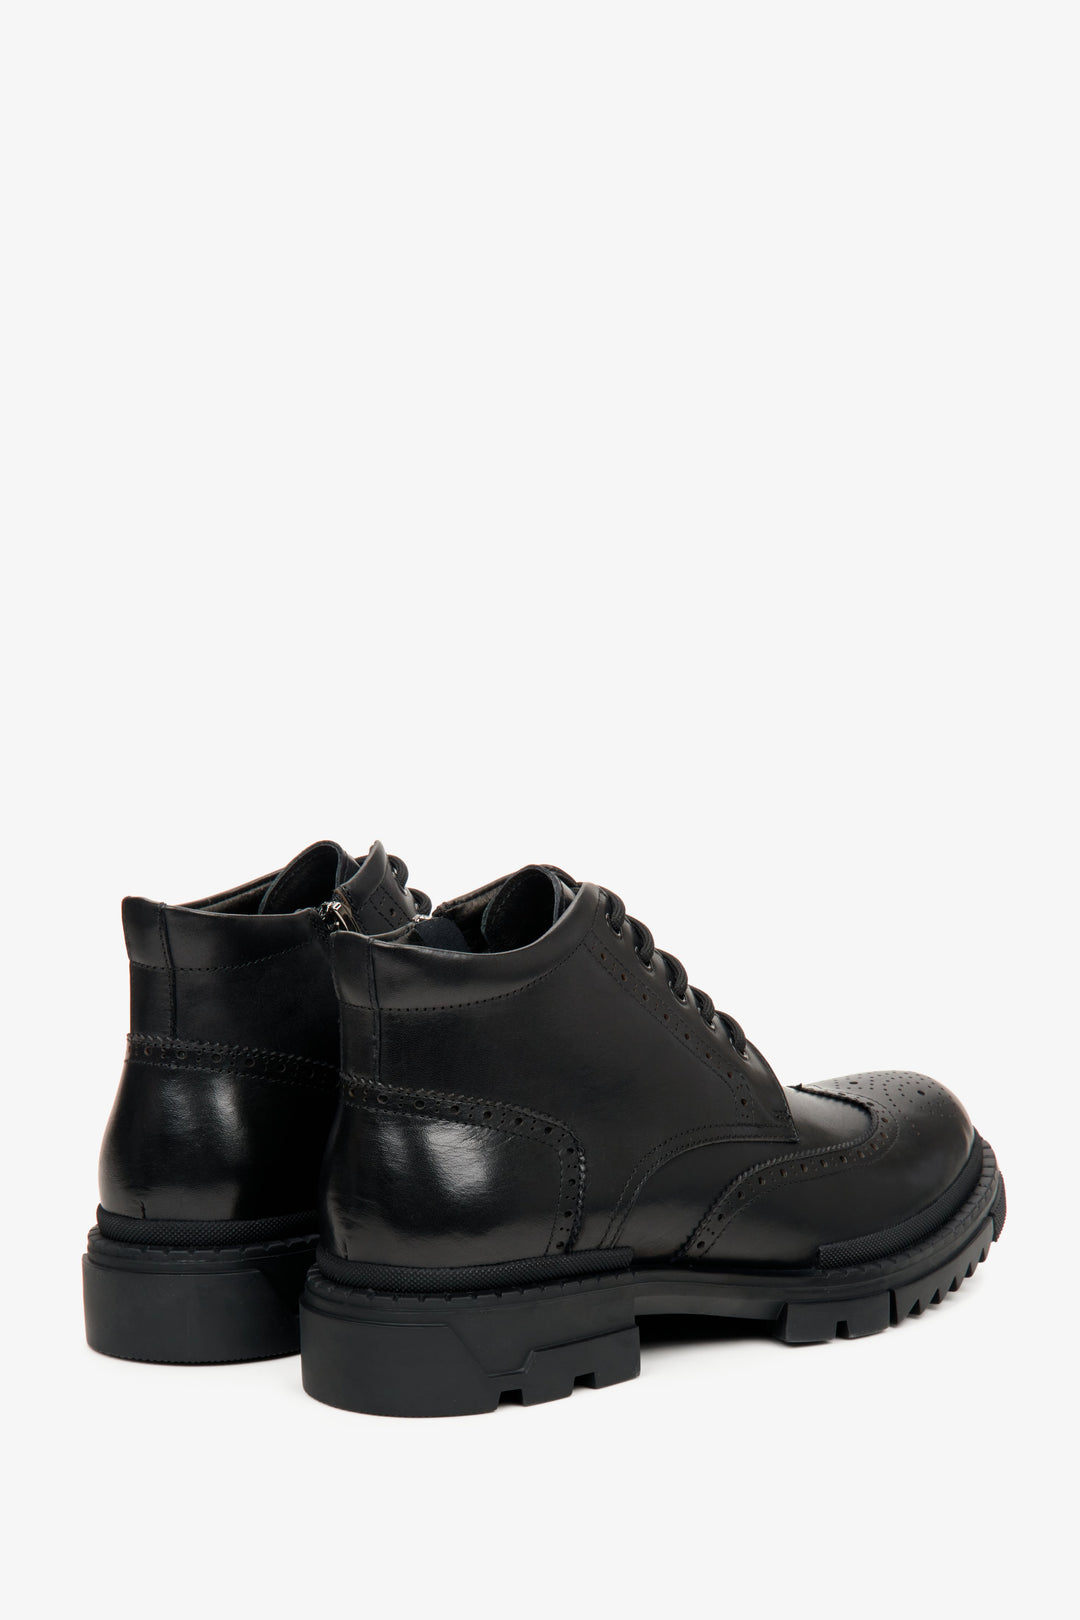 Women's Estro black leather winter boots - presentation of the shoe's heel.